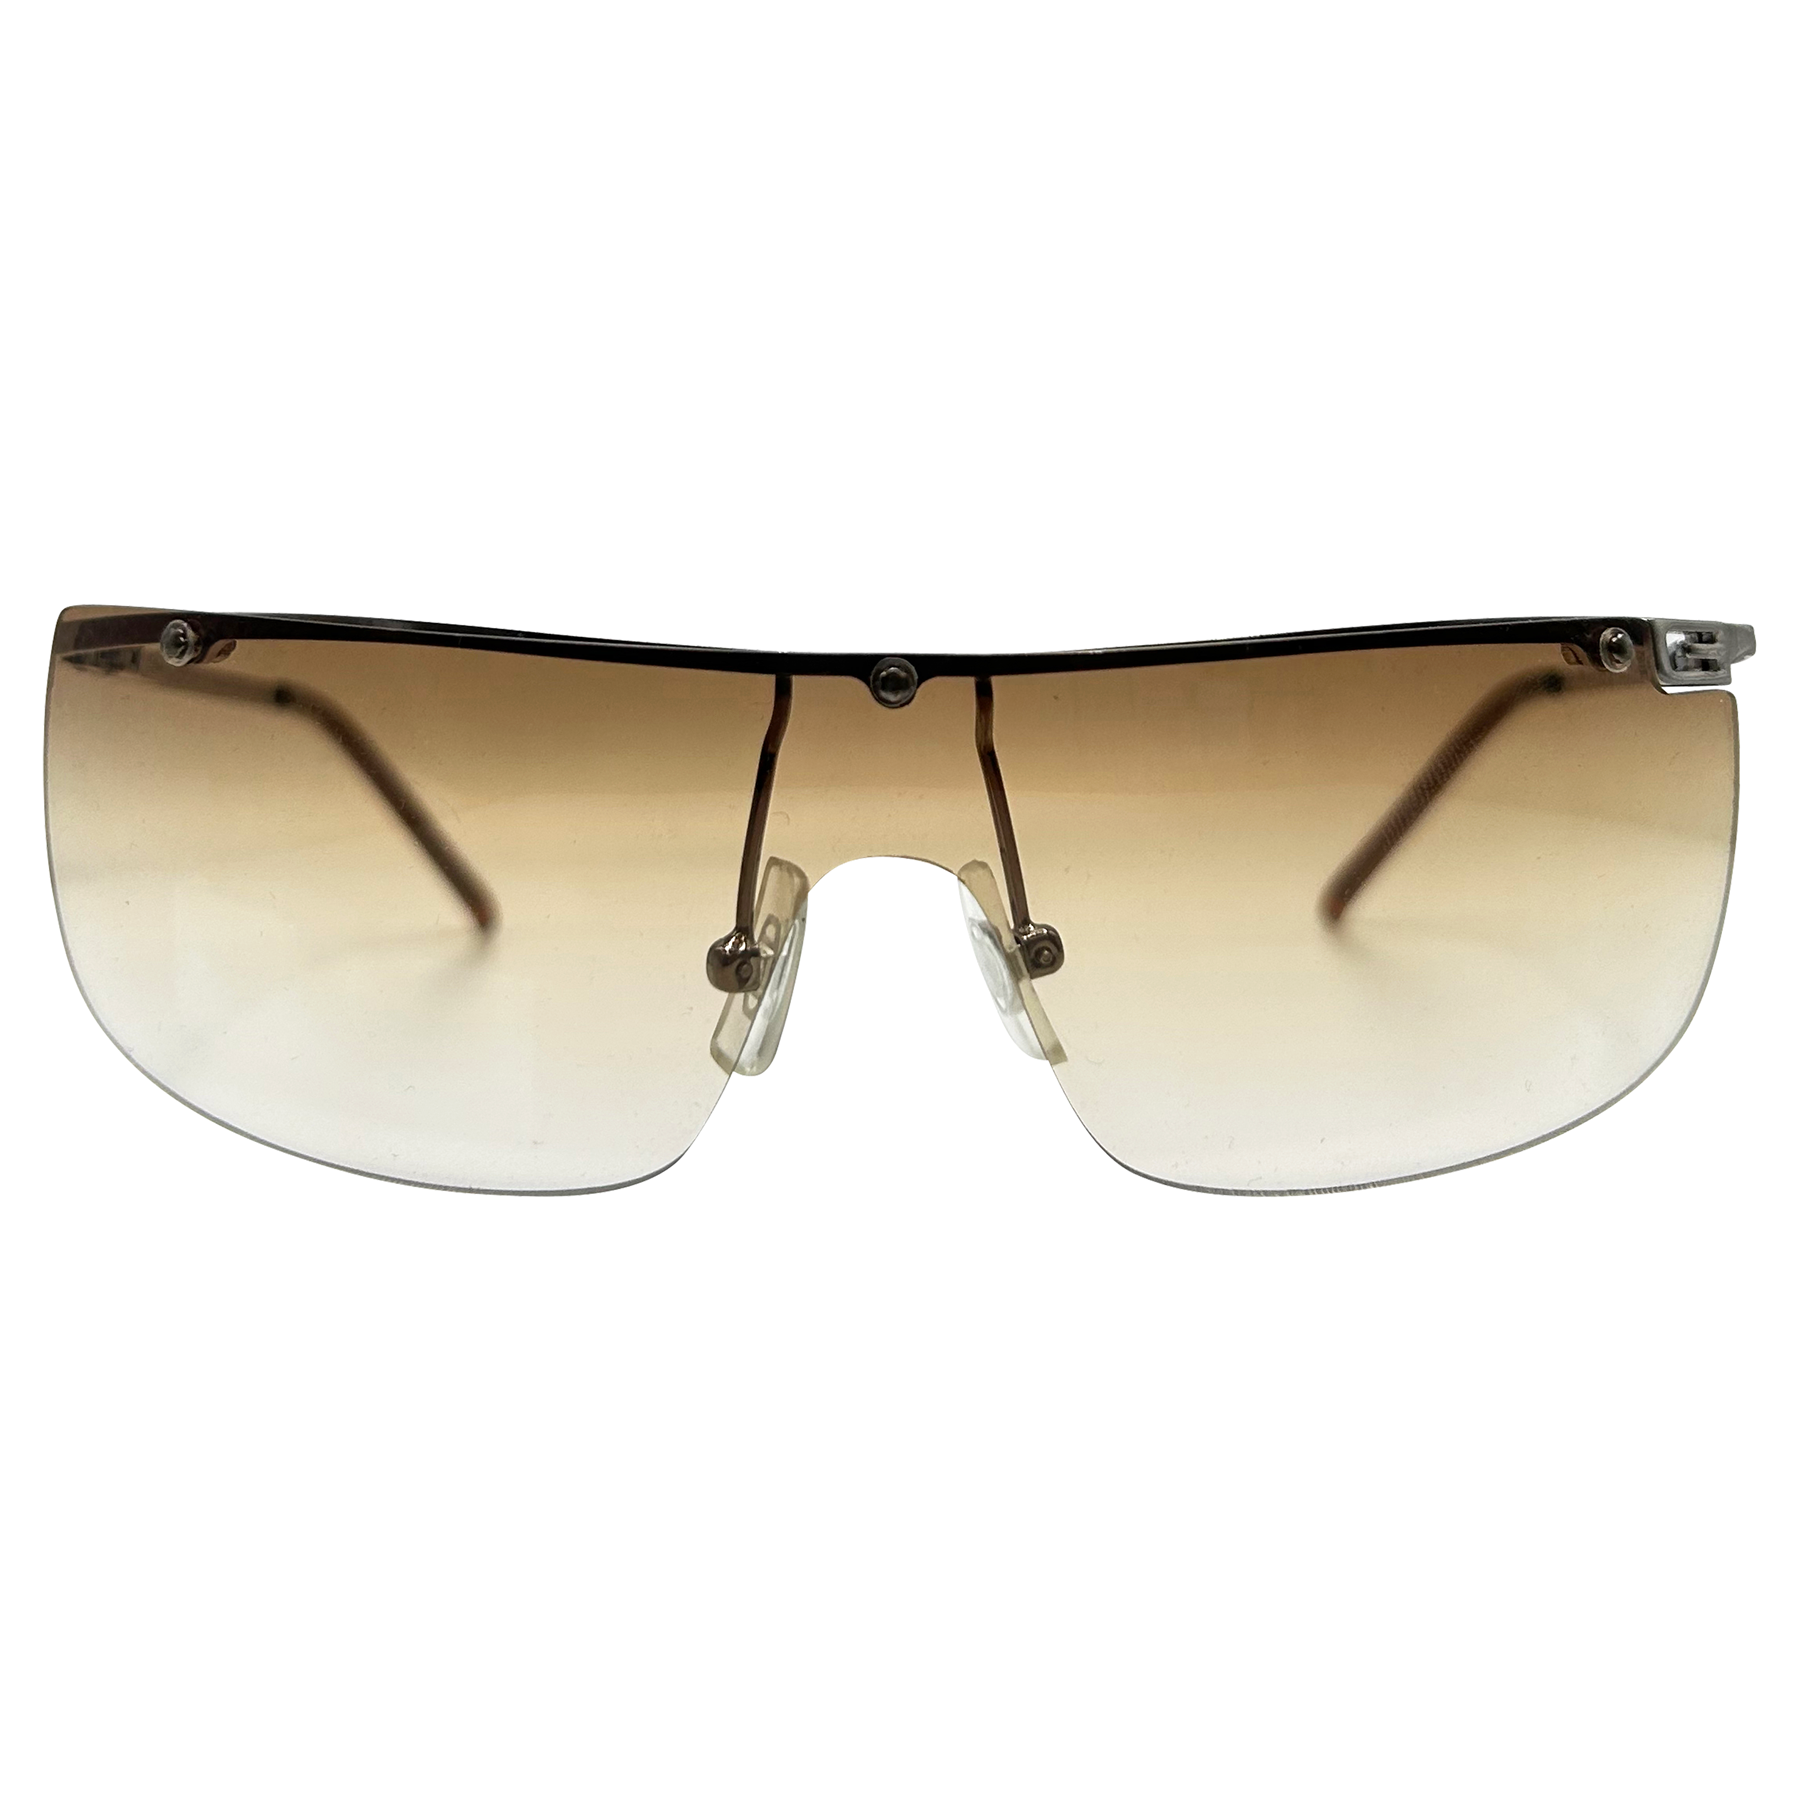 GiGi ALLEN Silver/Amber Y2k Rimless Sunglasses